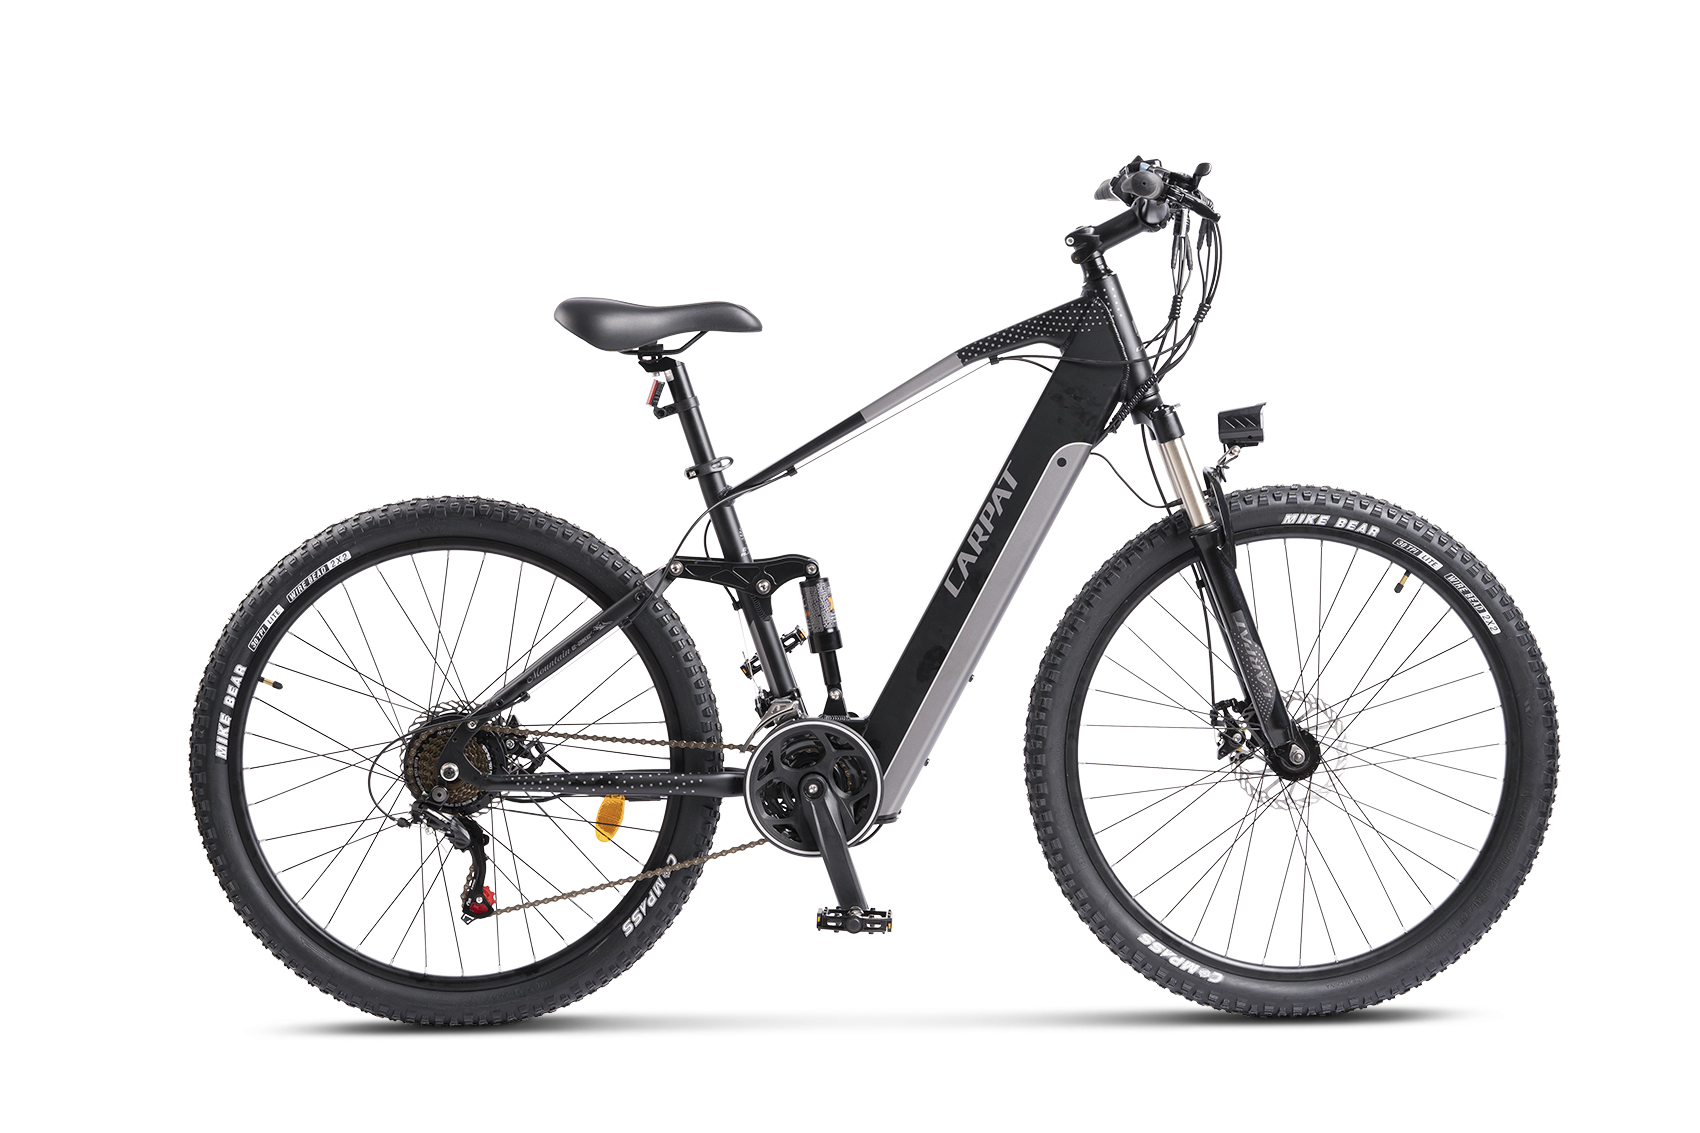 PROMO BICICLETE - Bicicleta Electrica MTB-FS (E-Bike) CARPAT C275M17E 27.5", Negru, https:carpatsport.ro